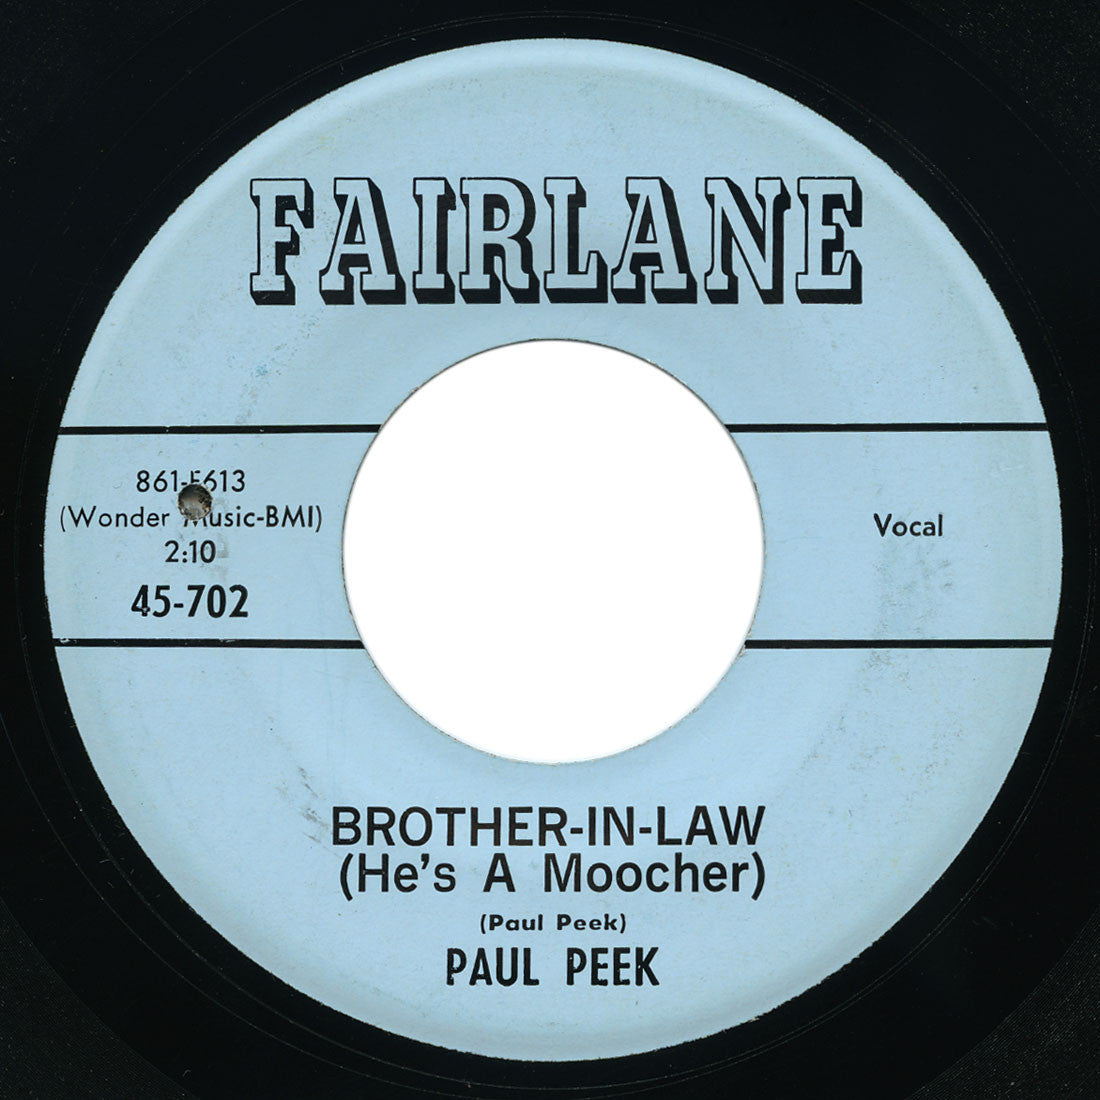 Paul Peek - Brother-In-Law (He’s A Moocher) / Through The Teenage Years - Fairlane